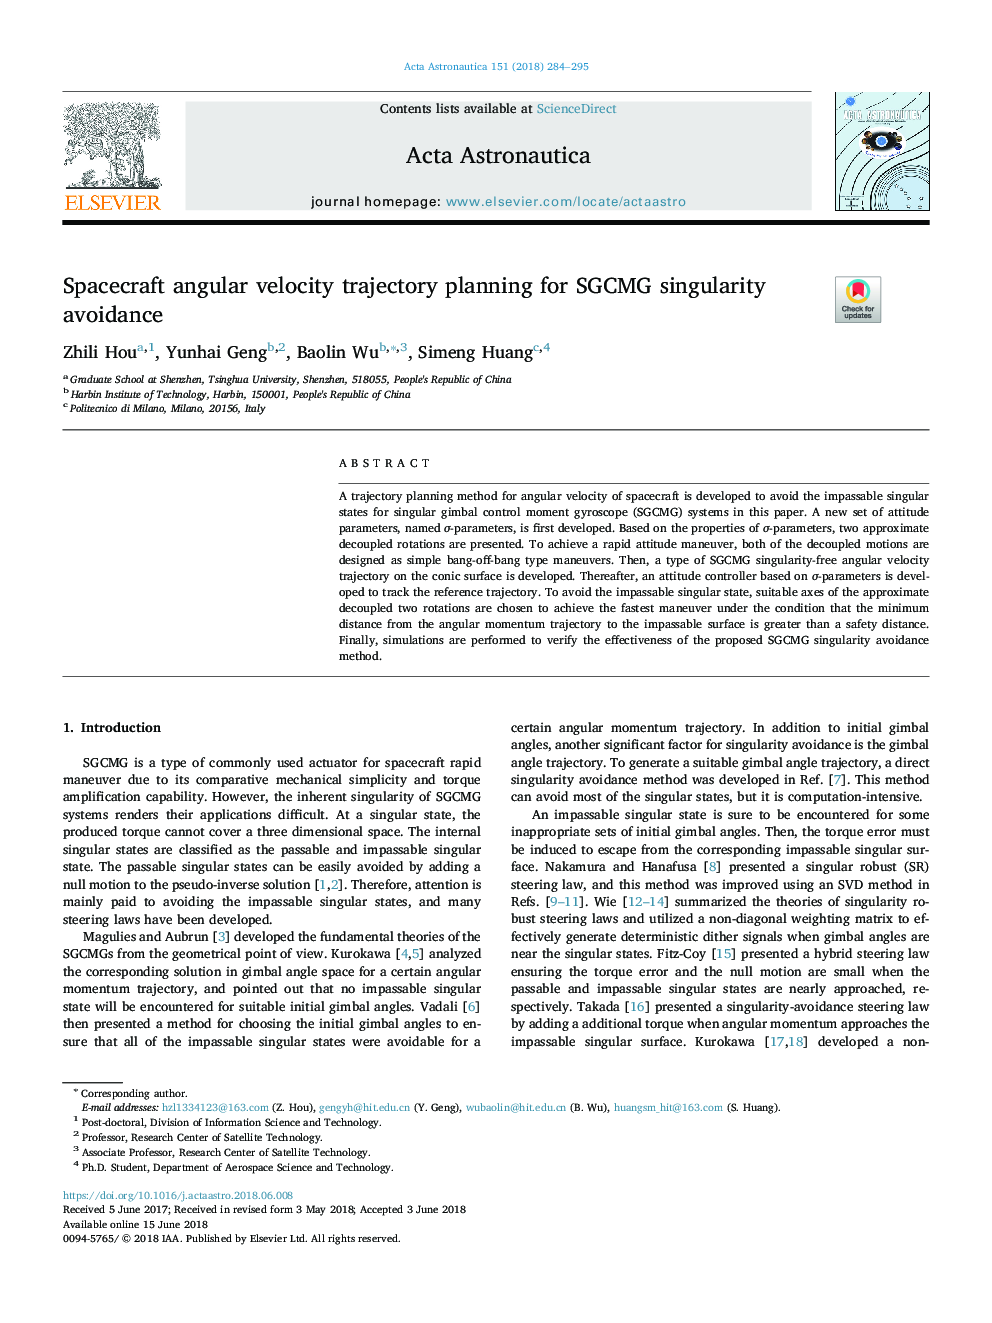 Spacecraft angular velocity trajectory planning for SGCMG singularity avoidance